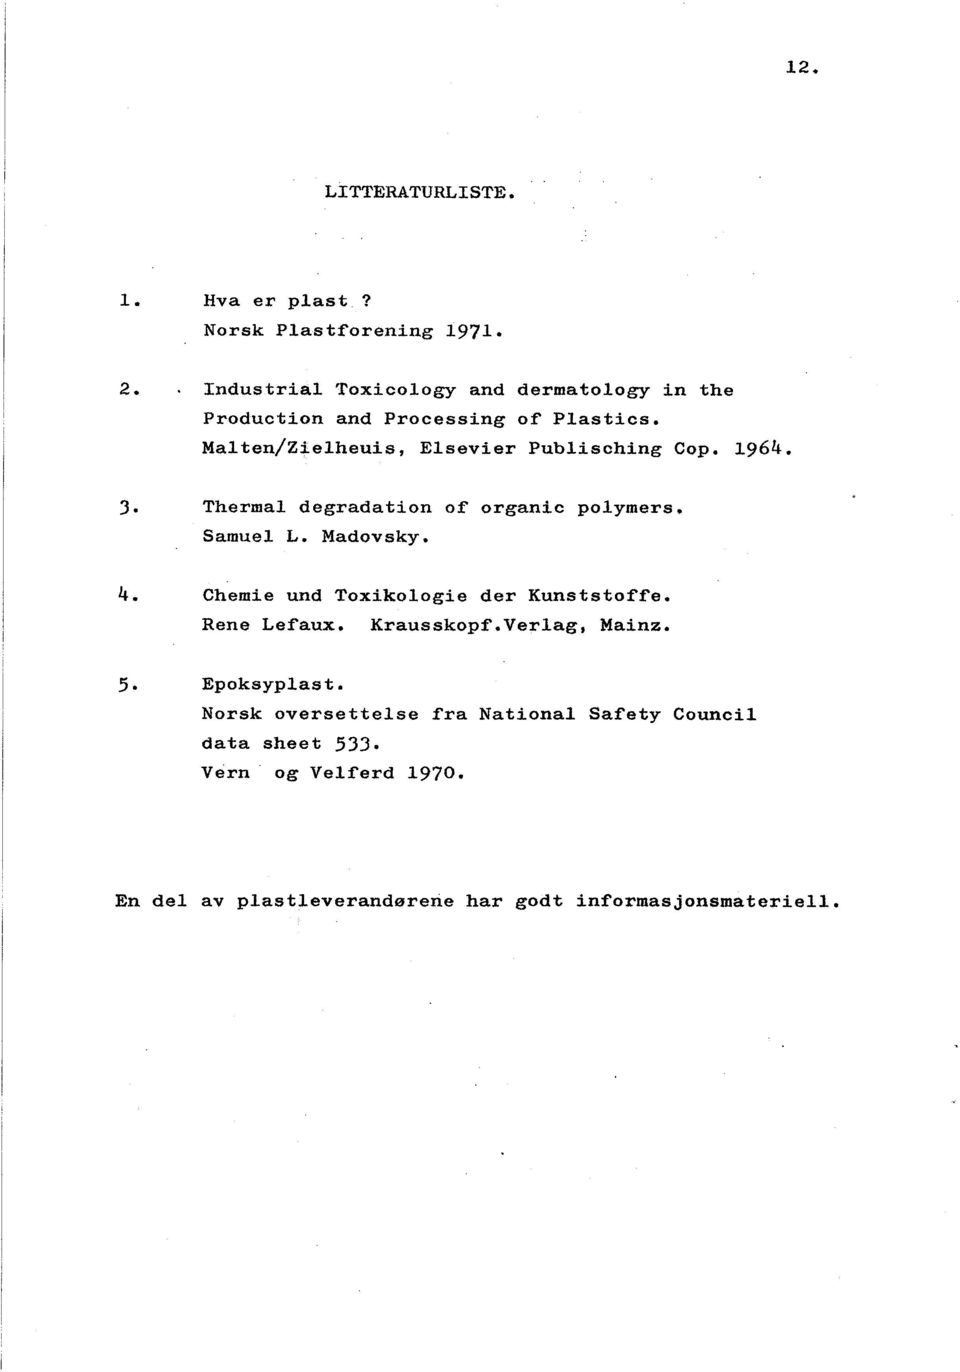 1964. 3. Thermal degrada tion of organic polymers. Samuel L. Madovsky. 4. Chemie und Toxikologie der Kunststof~e. Rene Lefaux.